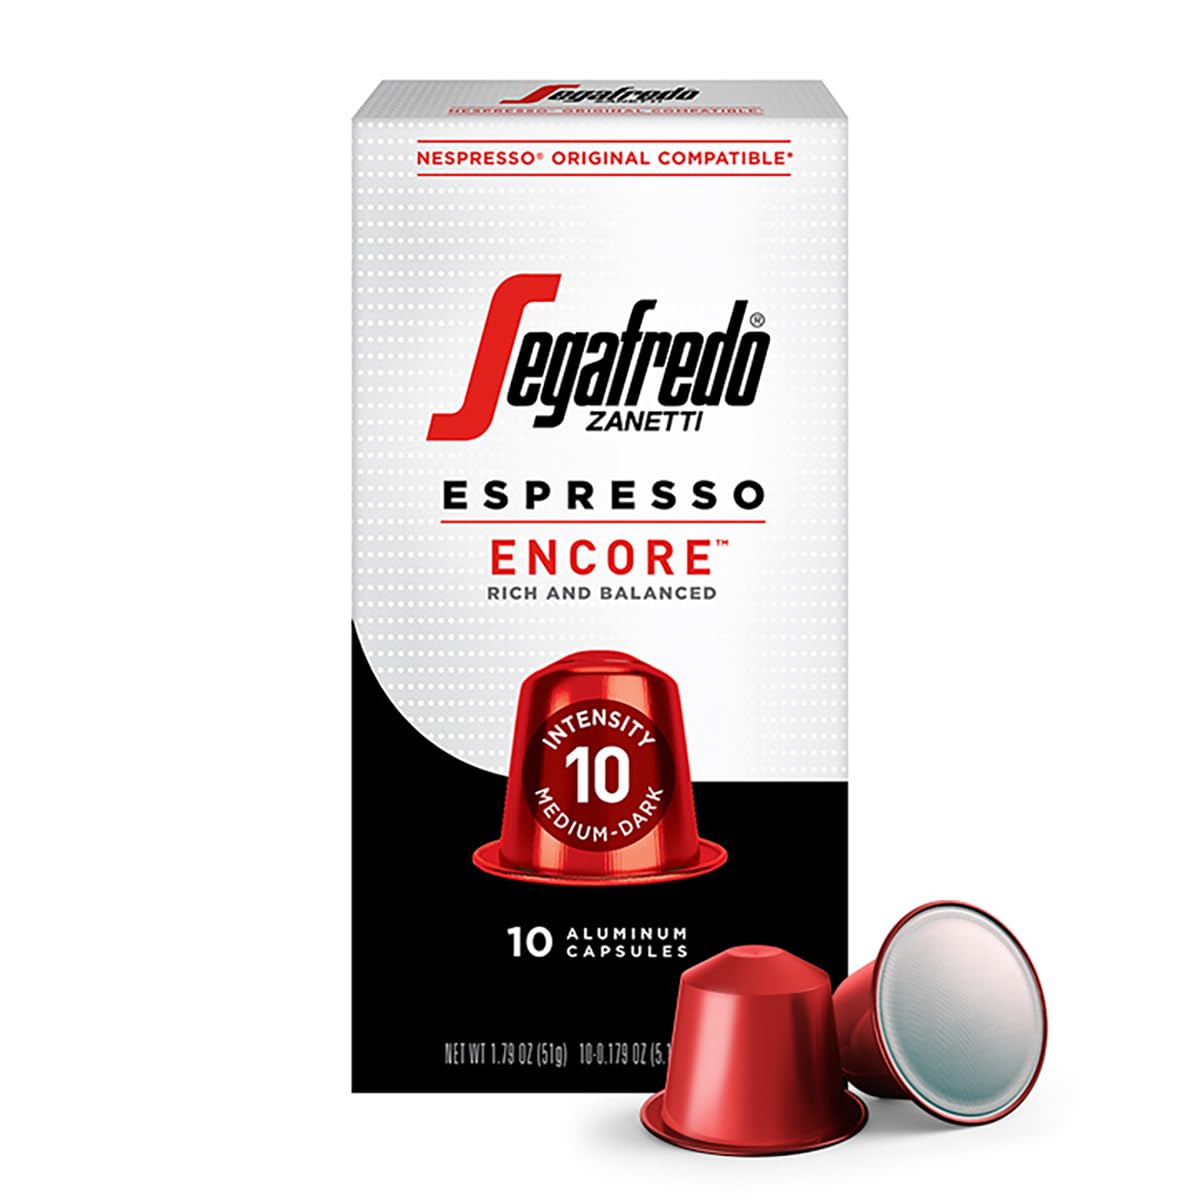 Segafredo Zanetti Encore Espresso Capsules, Medium-Dark Roast, Intensity 10, Compatible with Nespresso Original Machines, 10 Count Aluminum Pods